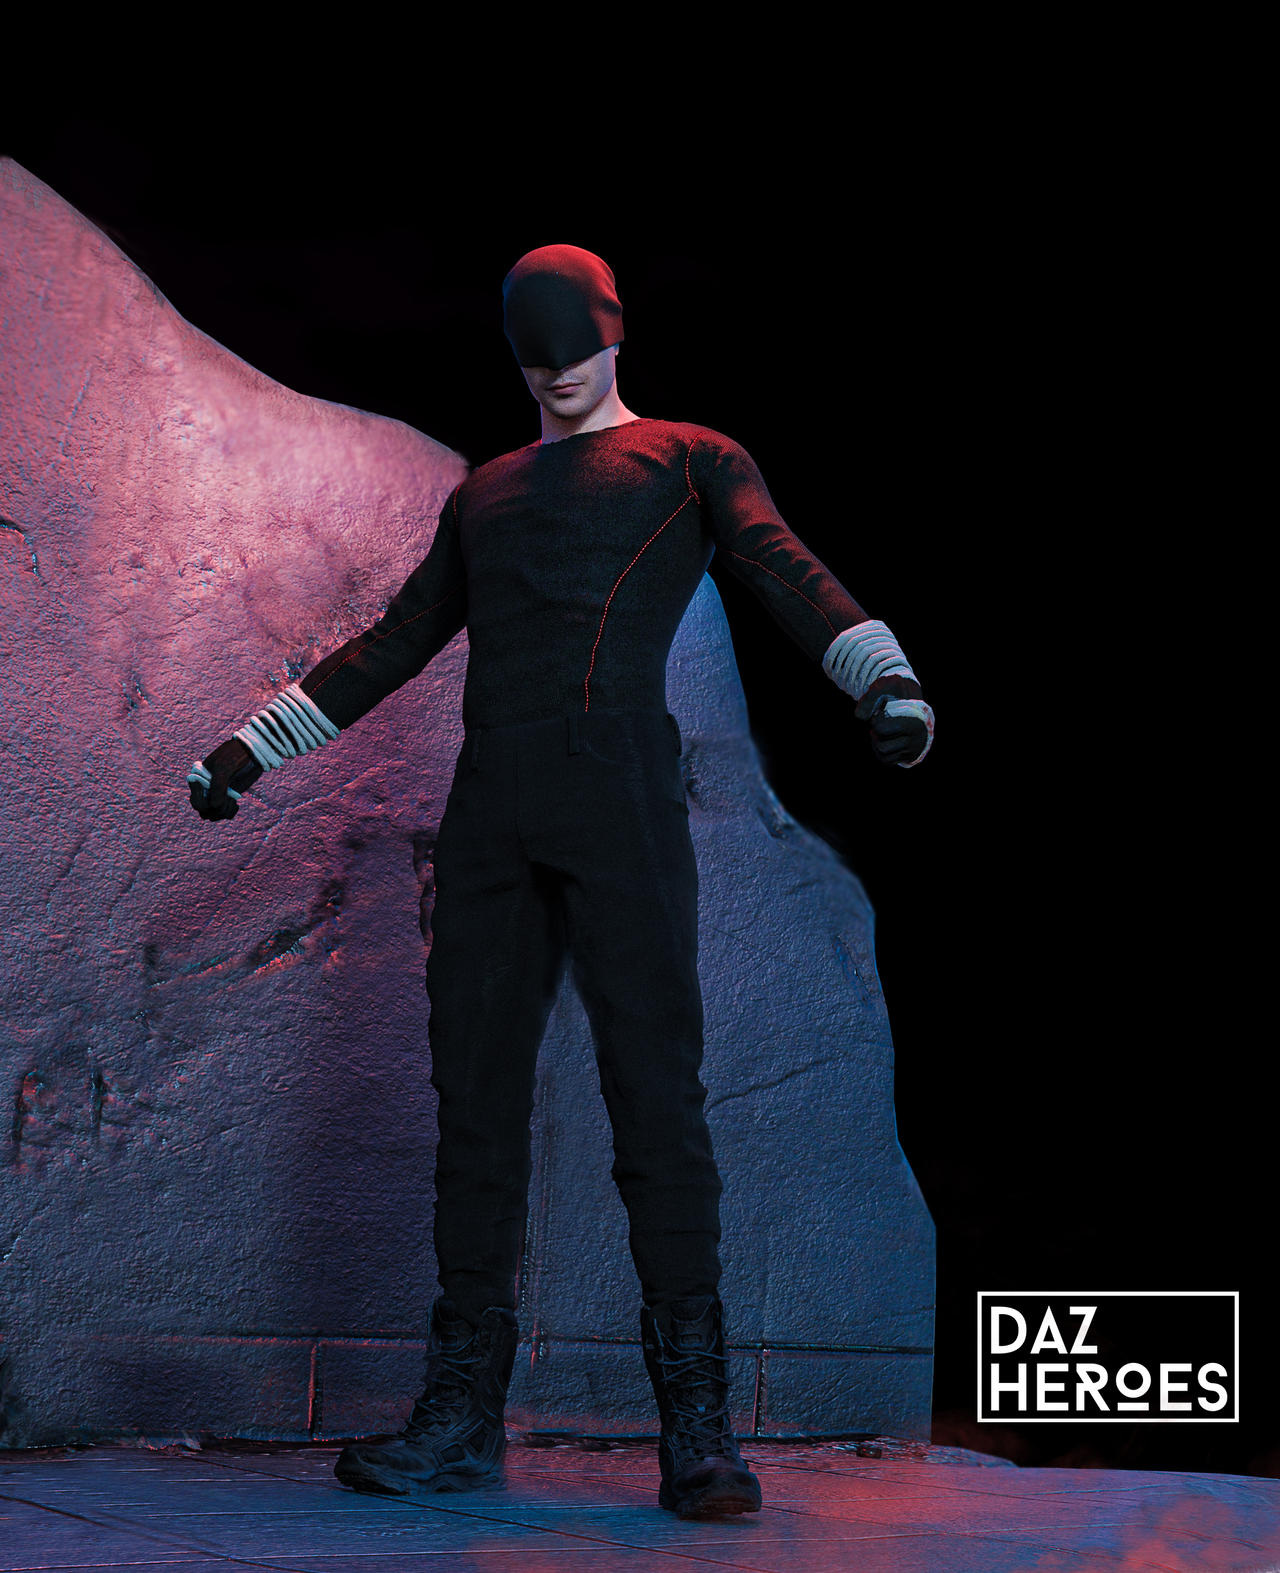 The Amazing Spiderman Genesis 8 Male Download by DazHeroes on DeviantArt